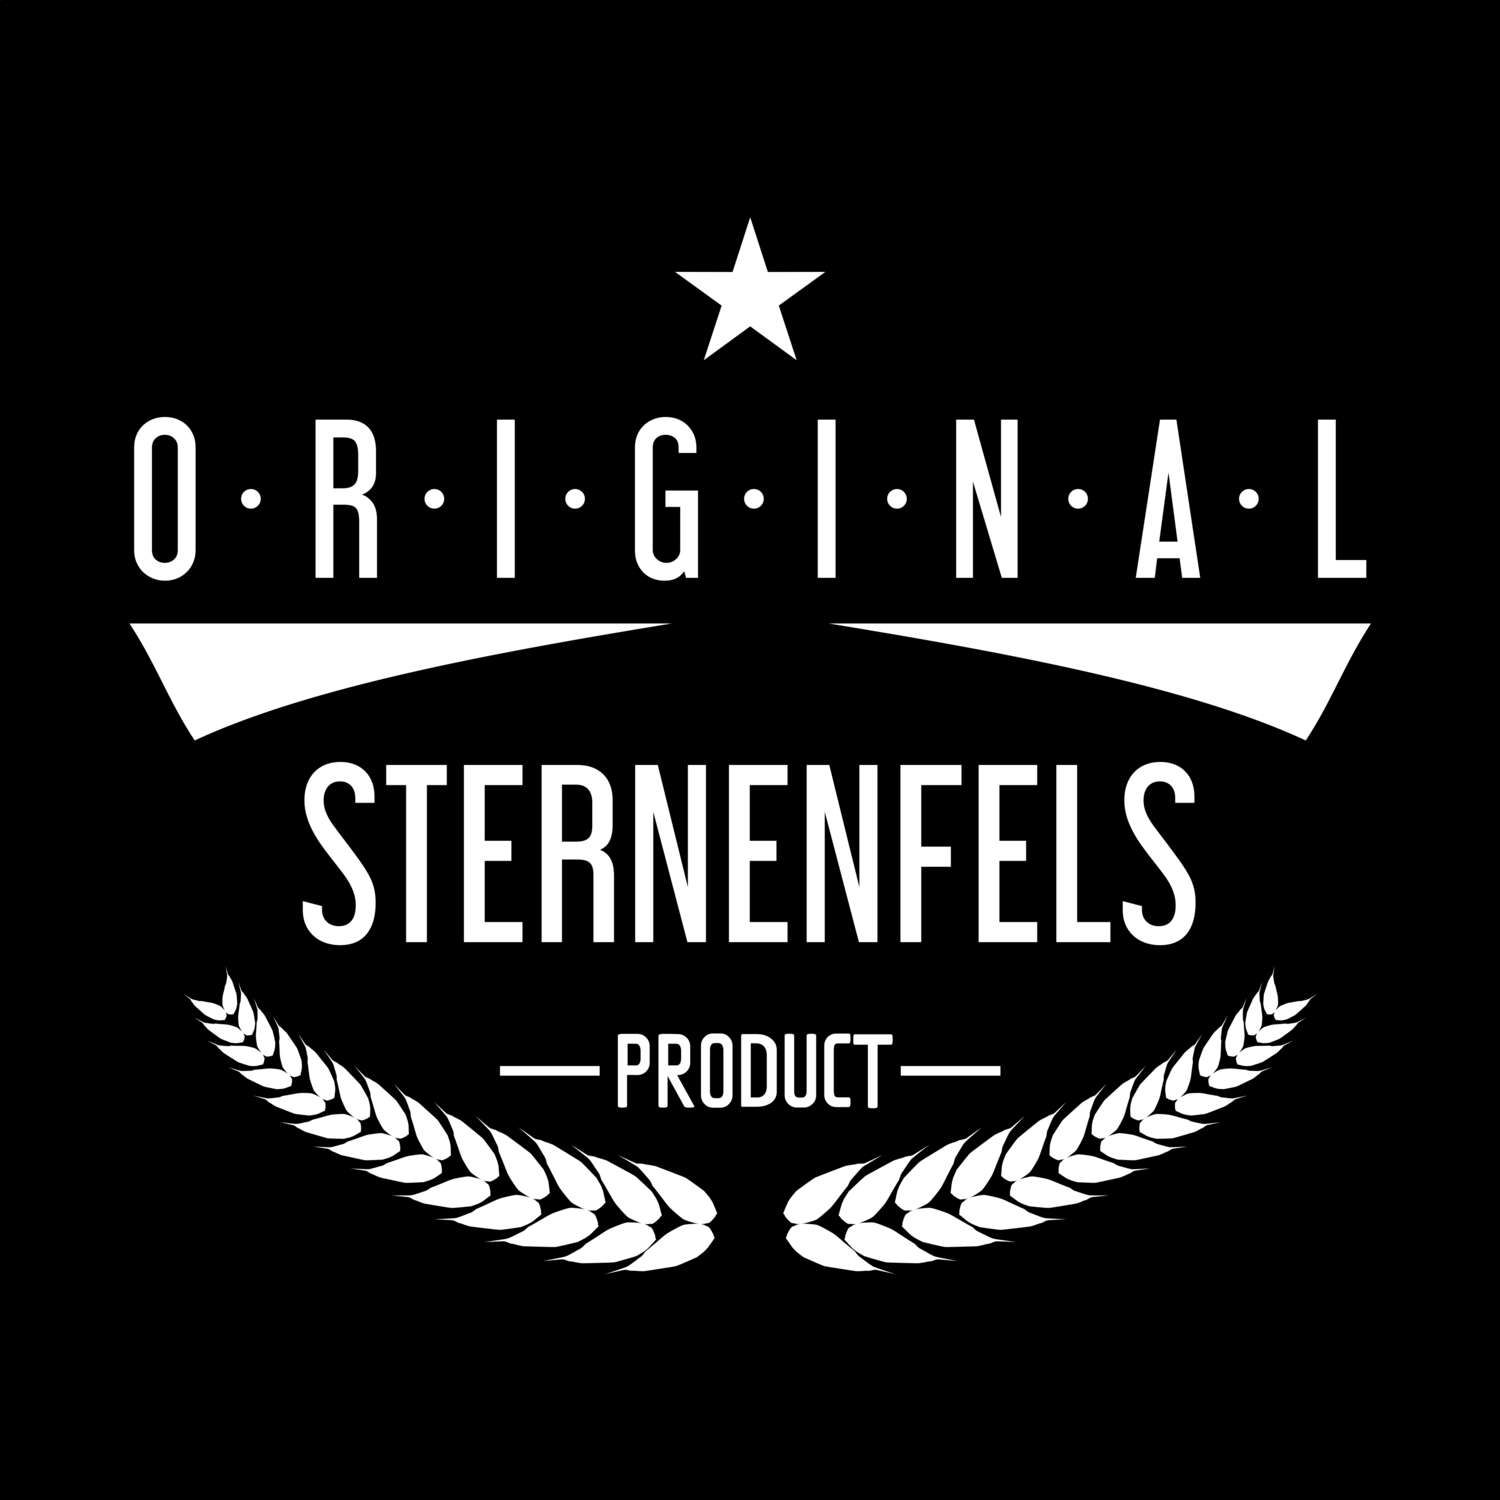 Sternenfels T-Shirt »Original Product«